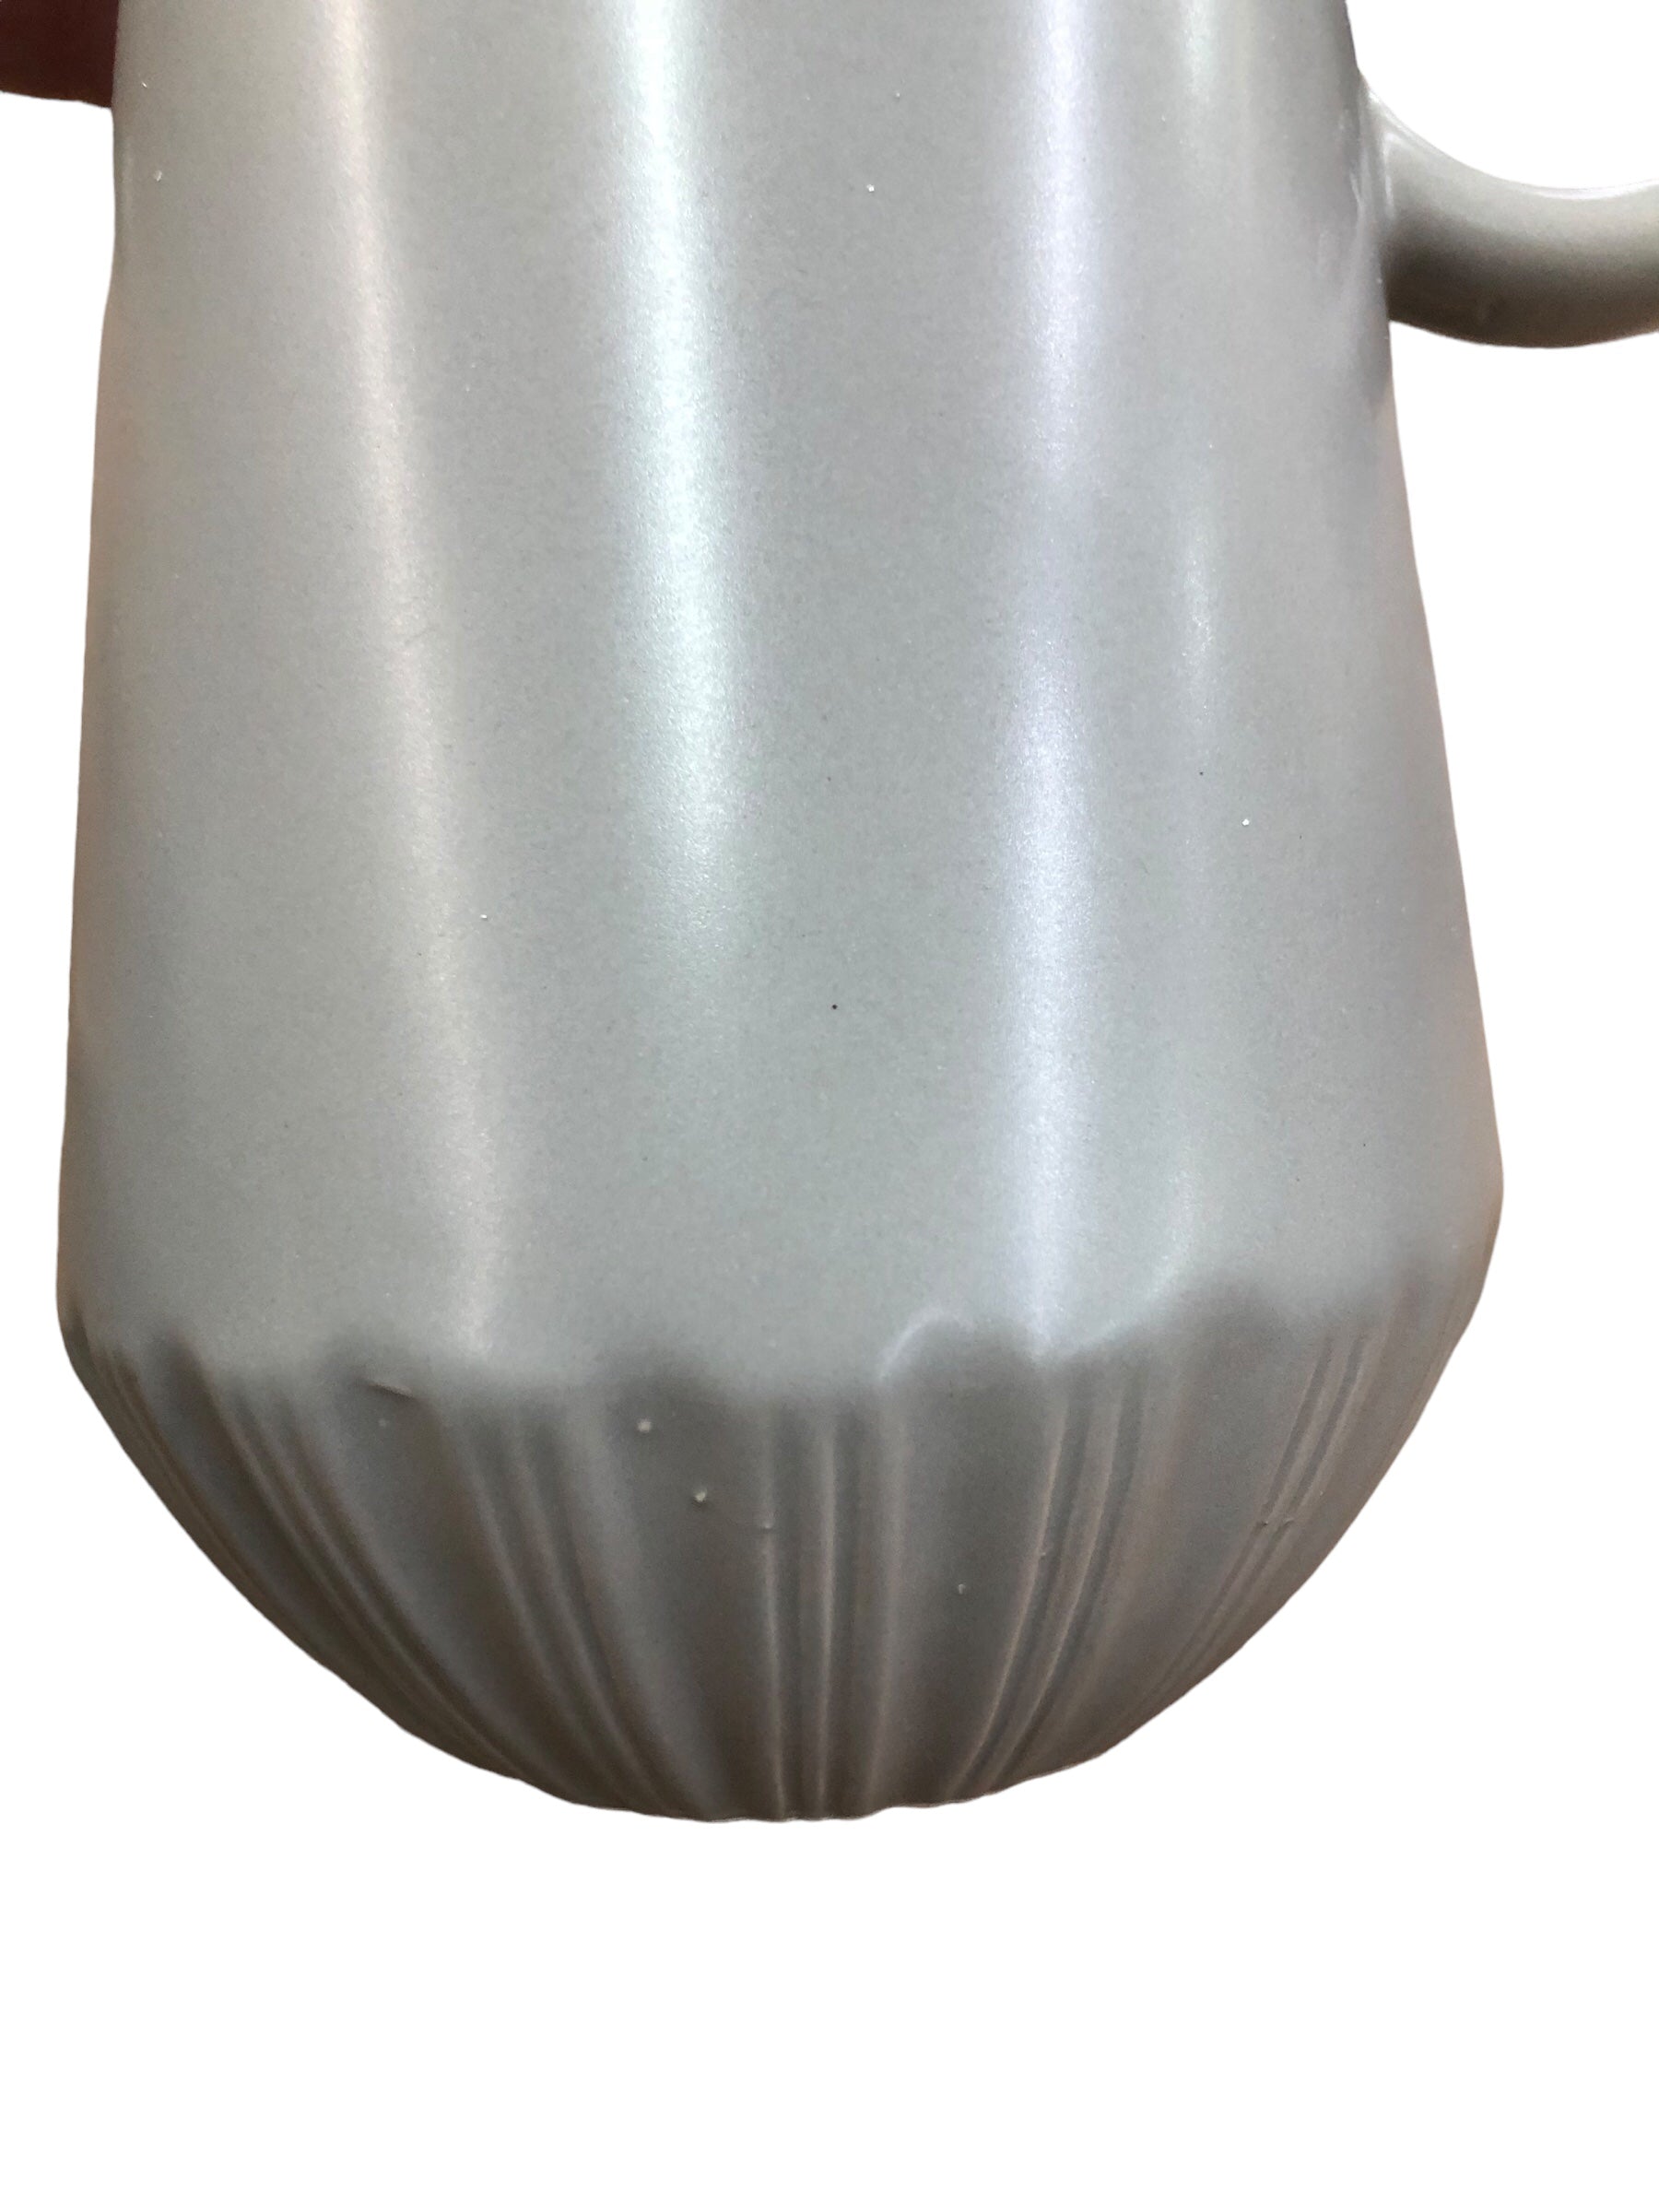 Grey ceramic pitcher